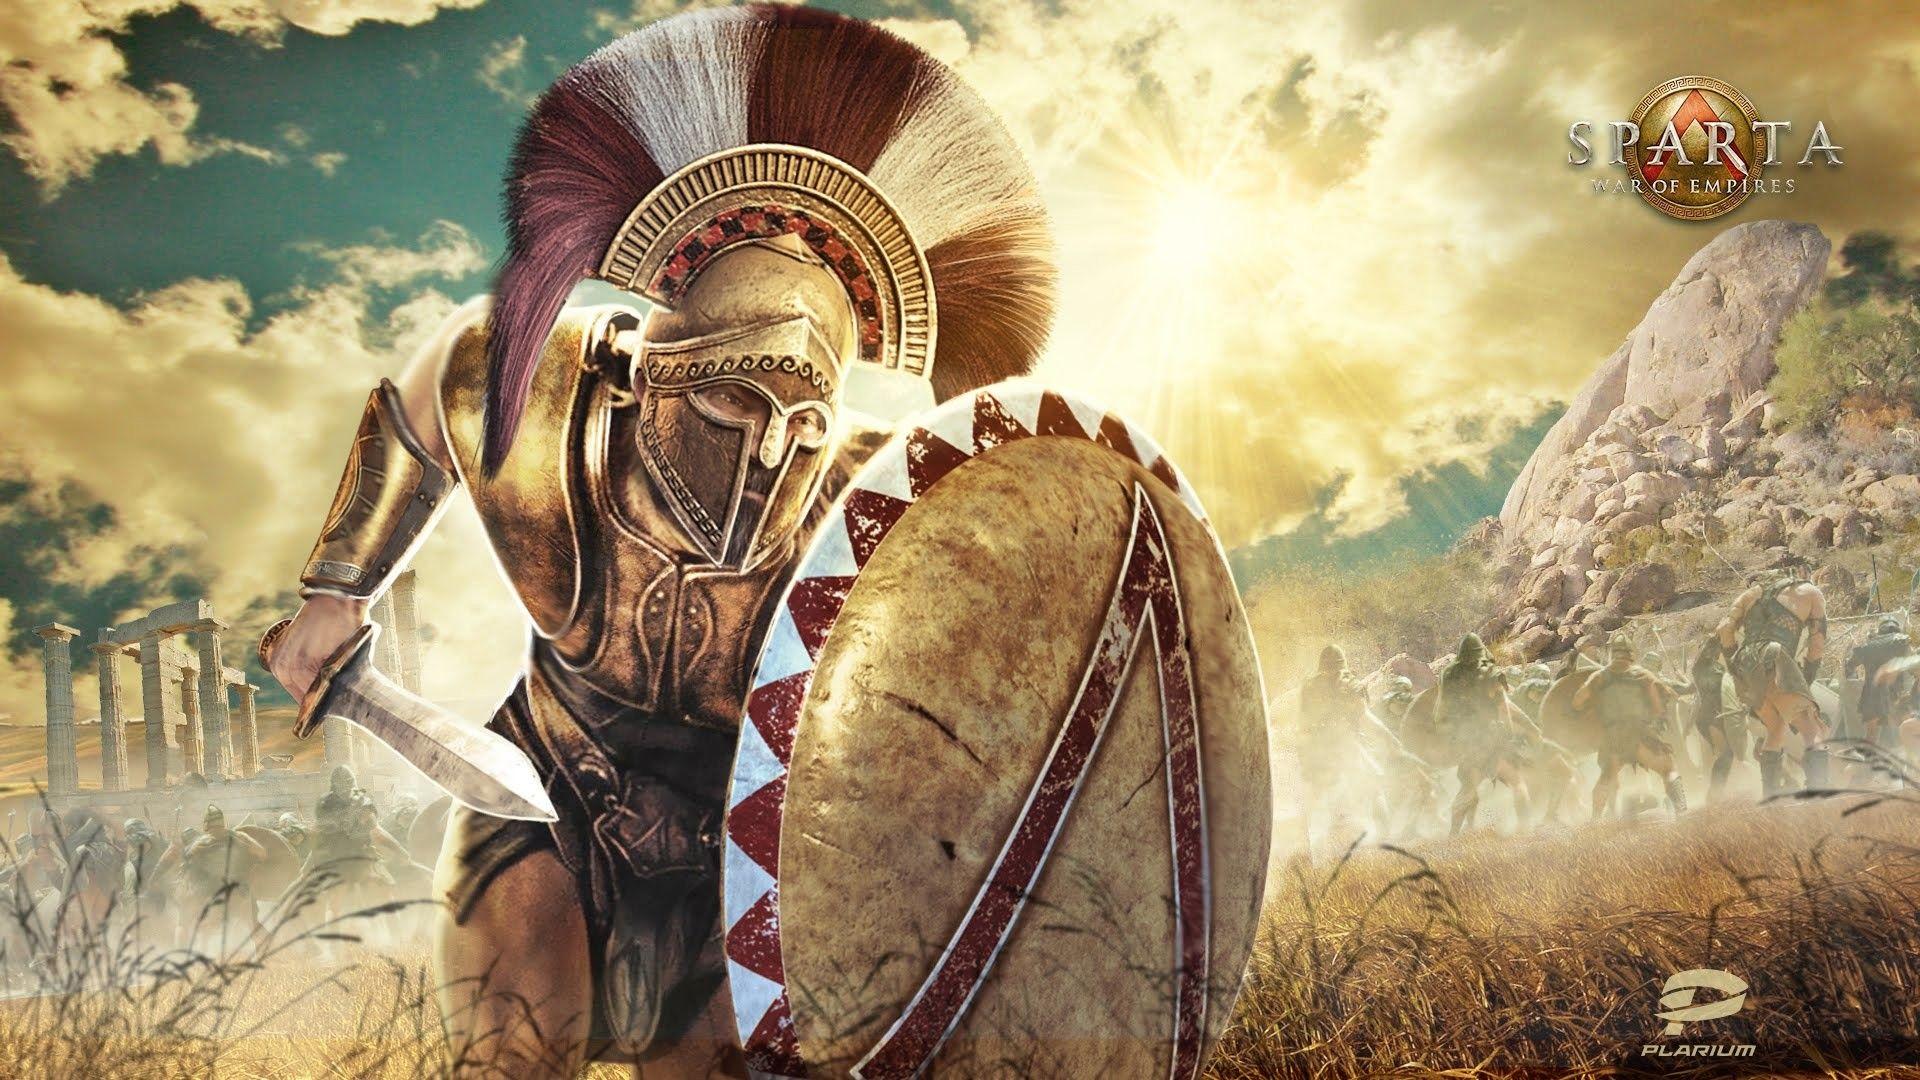 Spartan Warrior Wallpapers - Top Free Spartan Warrior Backgrounds ...